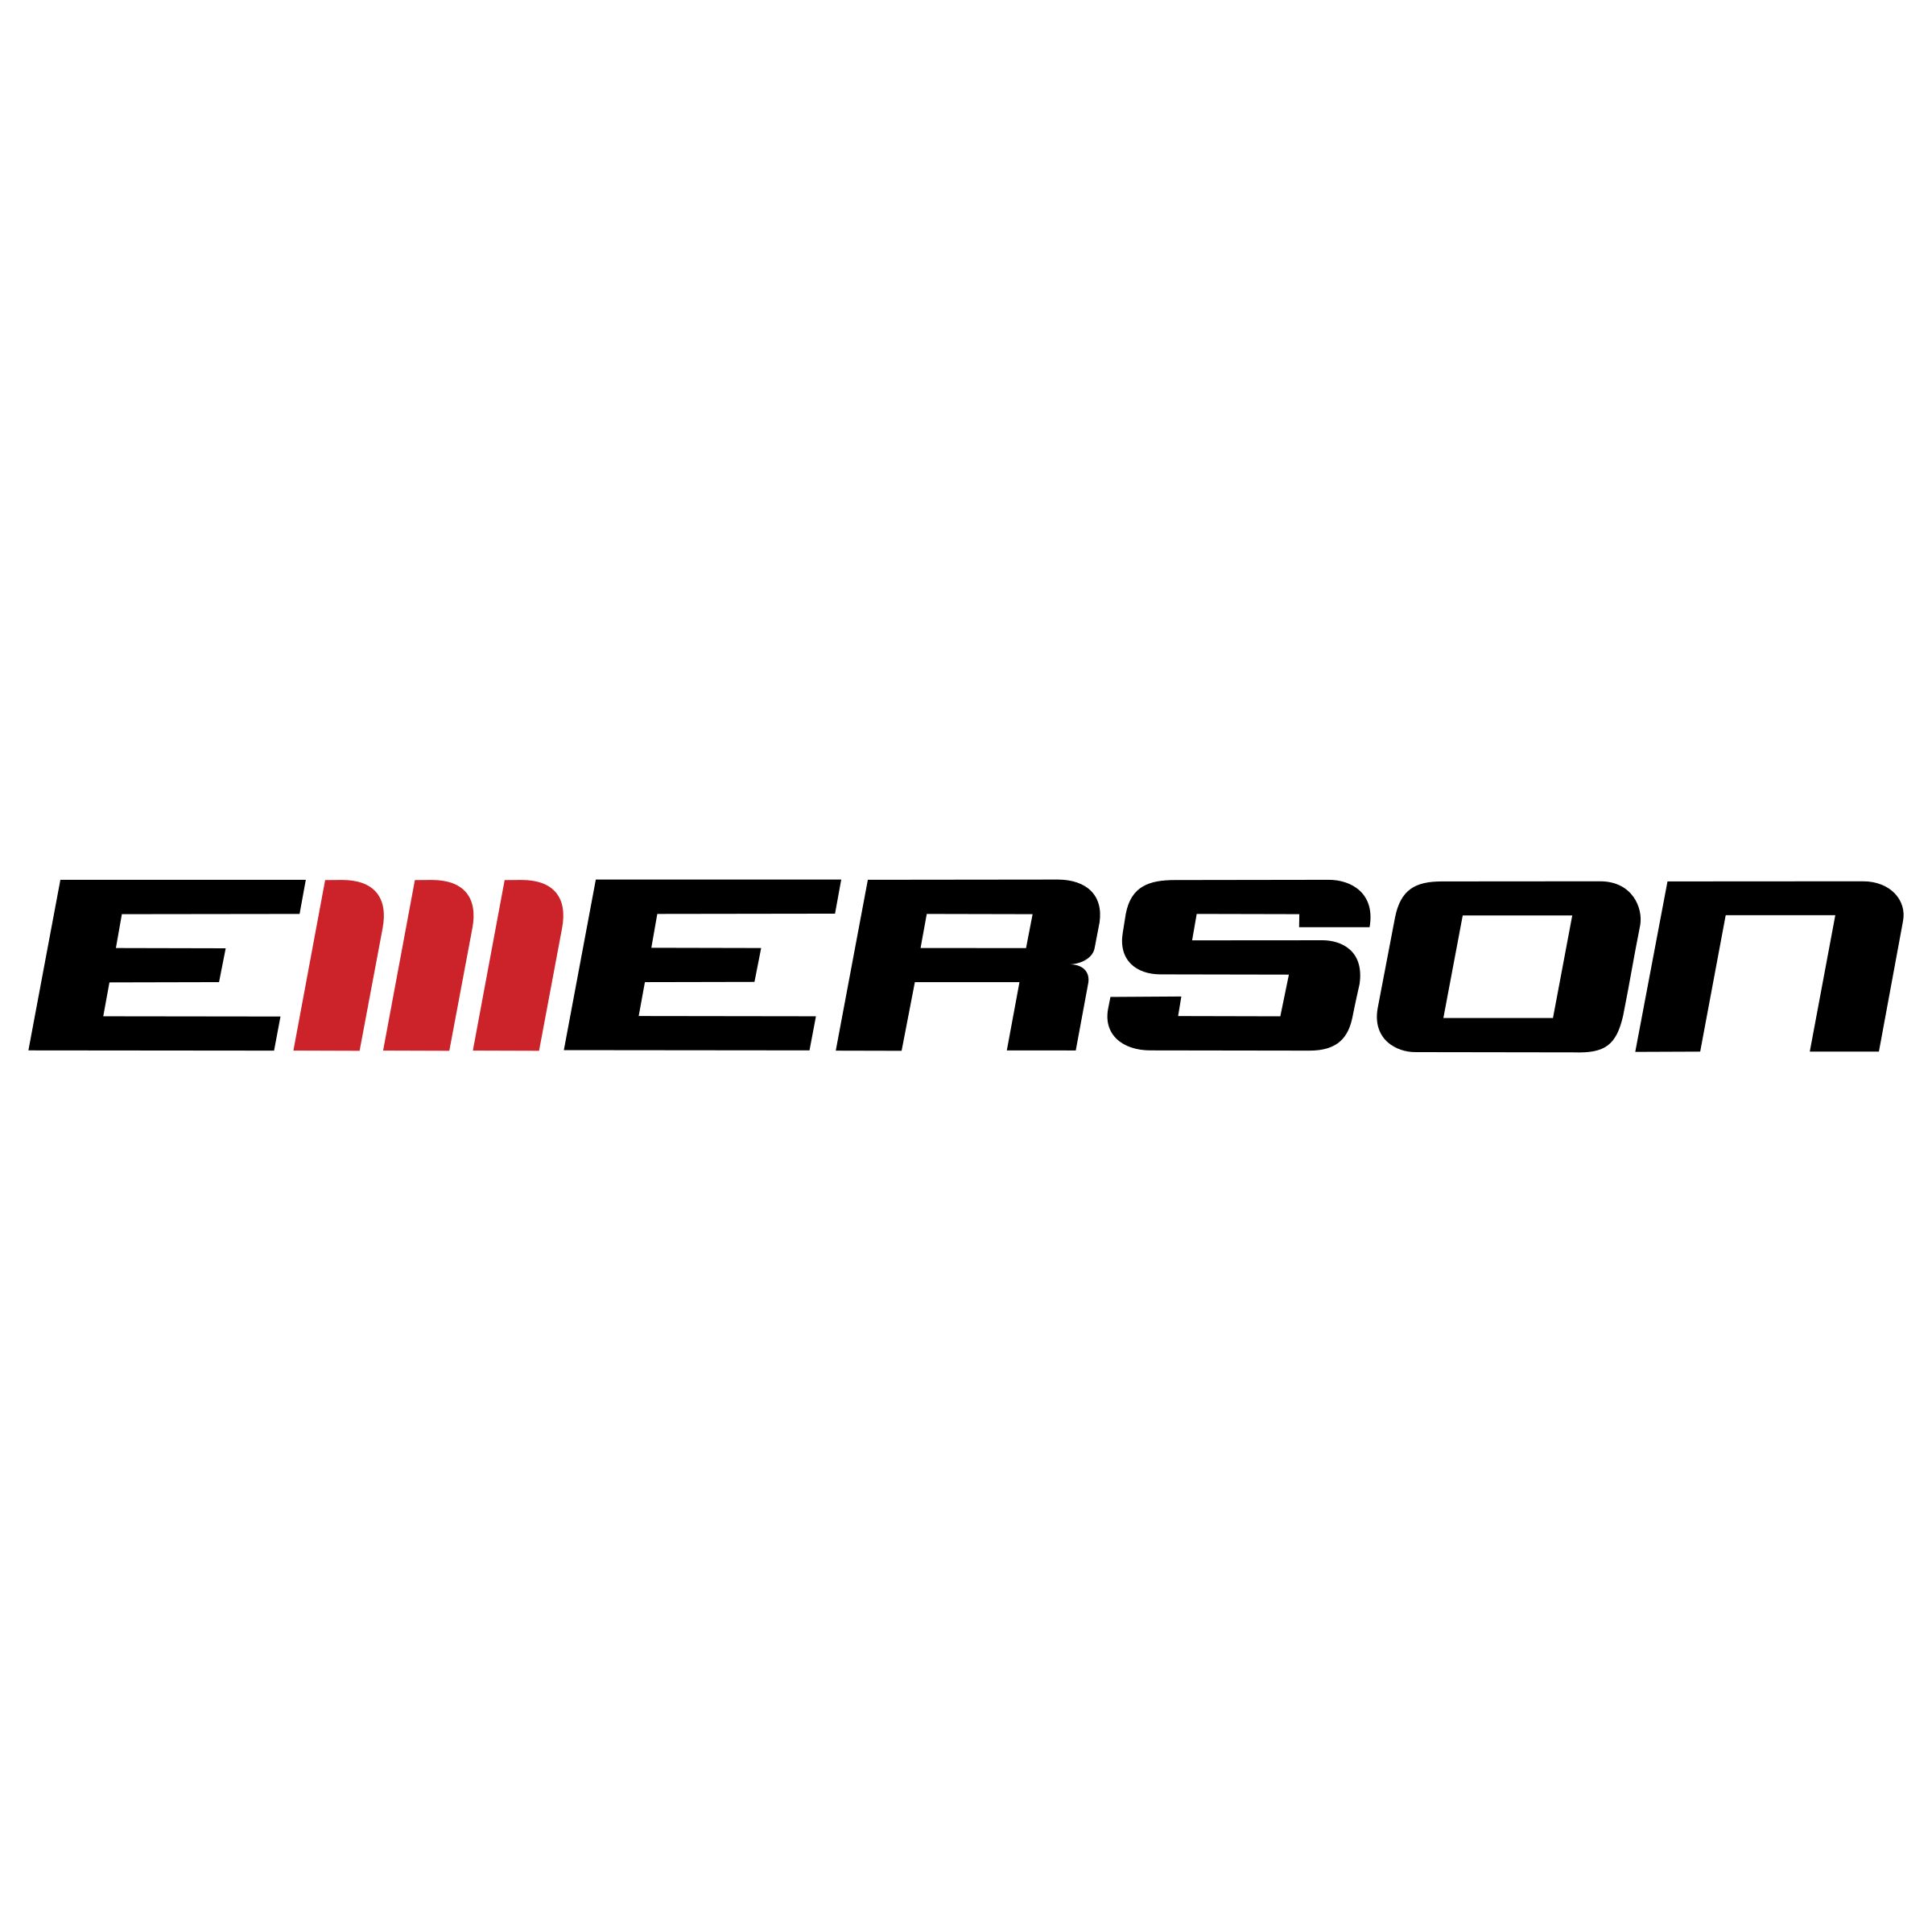 Emerson Logo - Emerson Logo PNG Transparent & SVG Vector - Freebie Supply